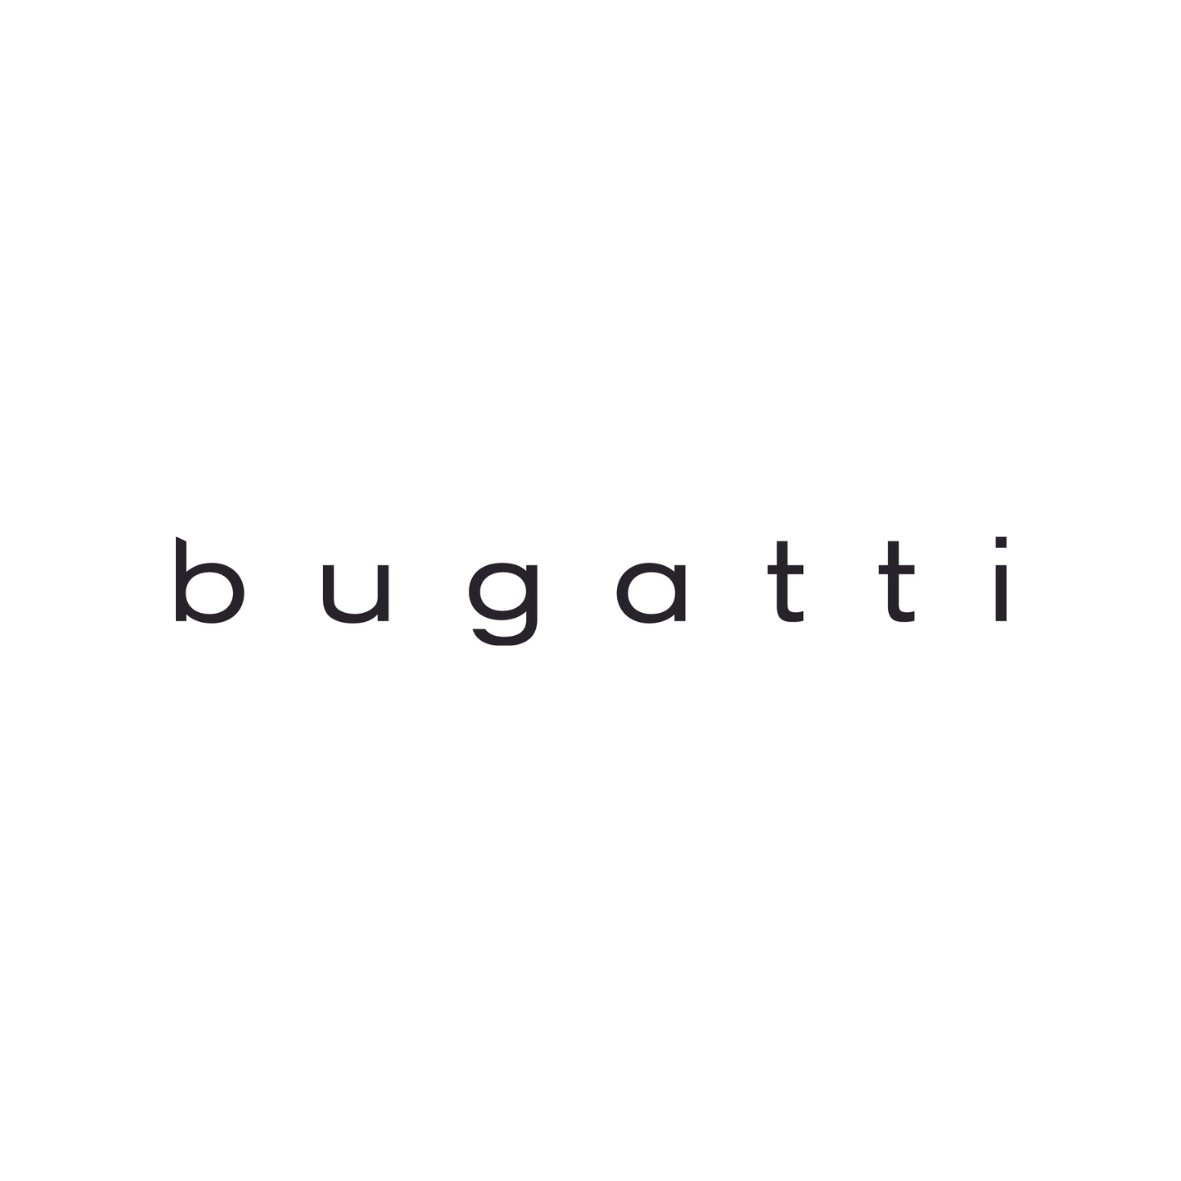 Bugatti - Matt O'Brien Fashions